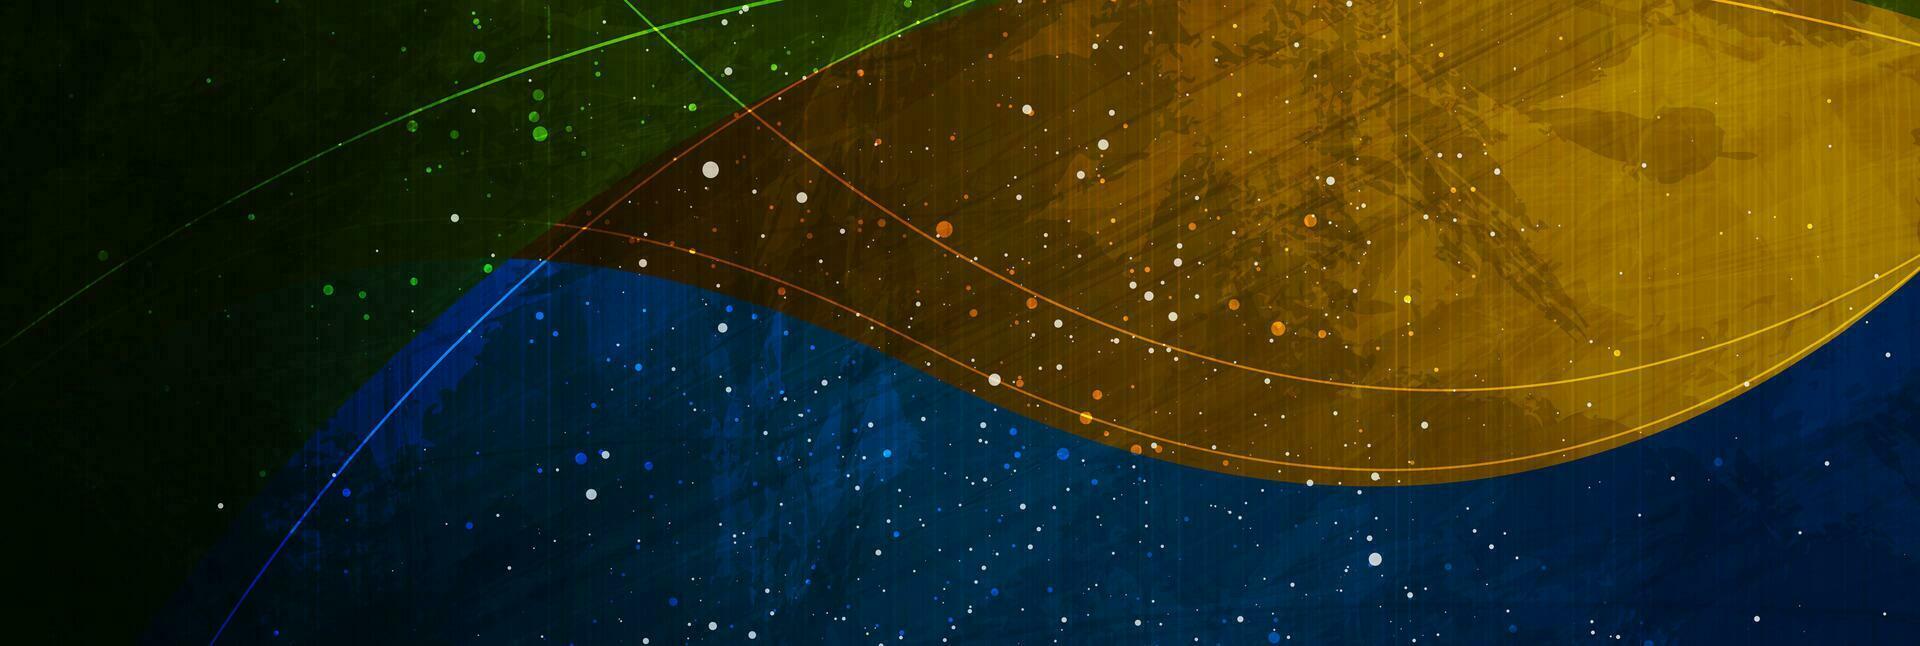 kleurrijk grunge golven met klein dots abstract achtergrond vector